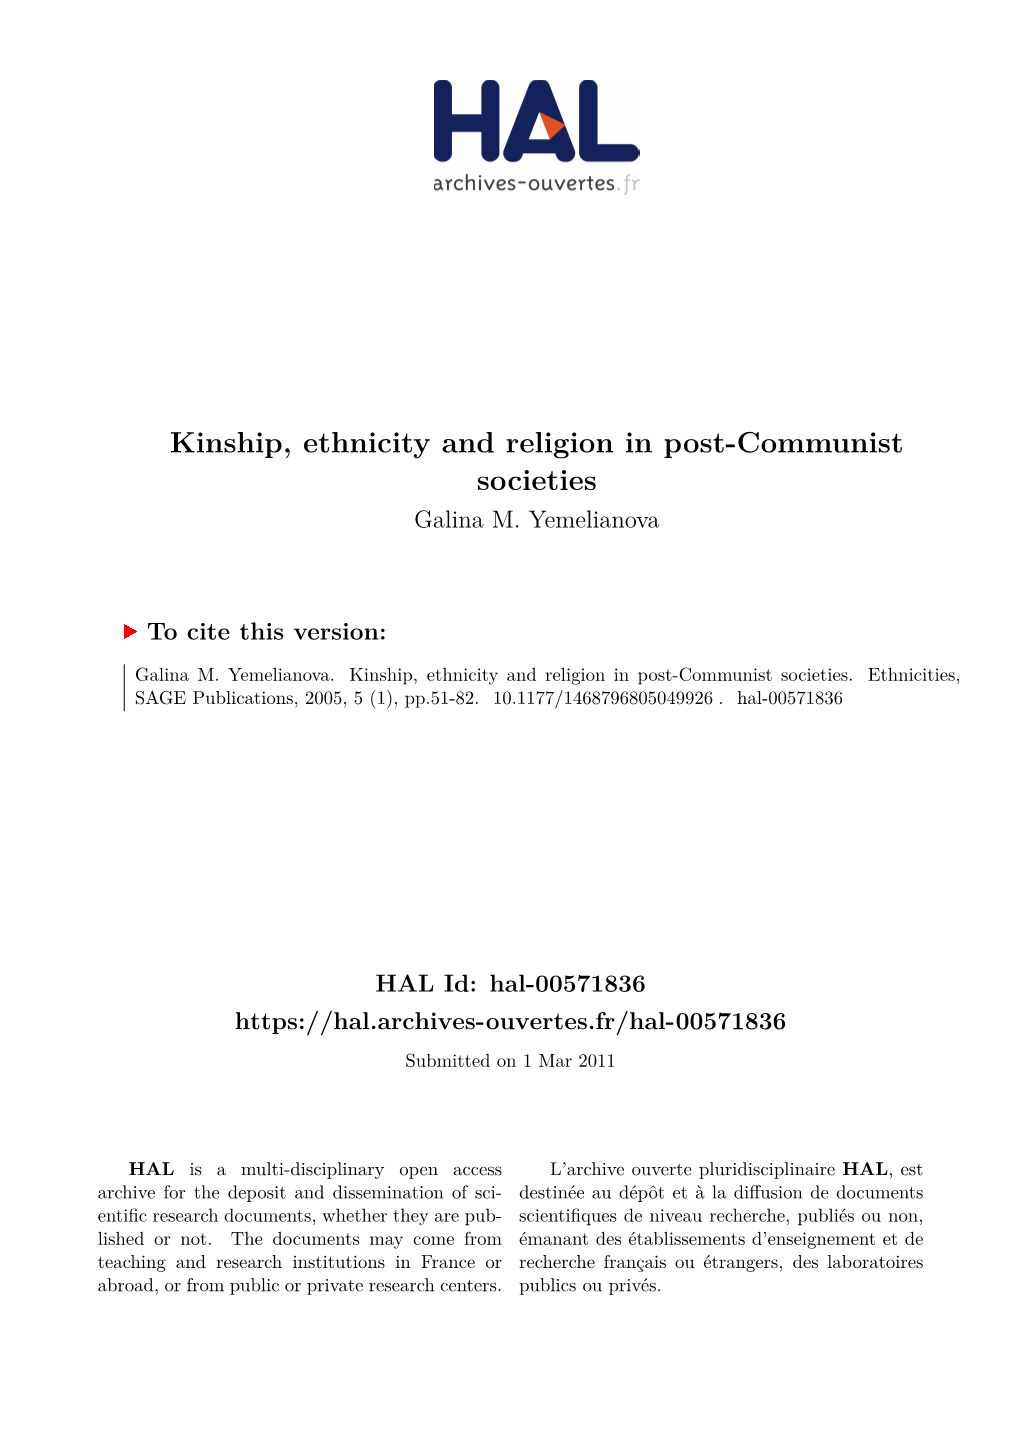 Kinship, Ethnicity and Religion in Post-Communist Societies Galina M